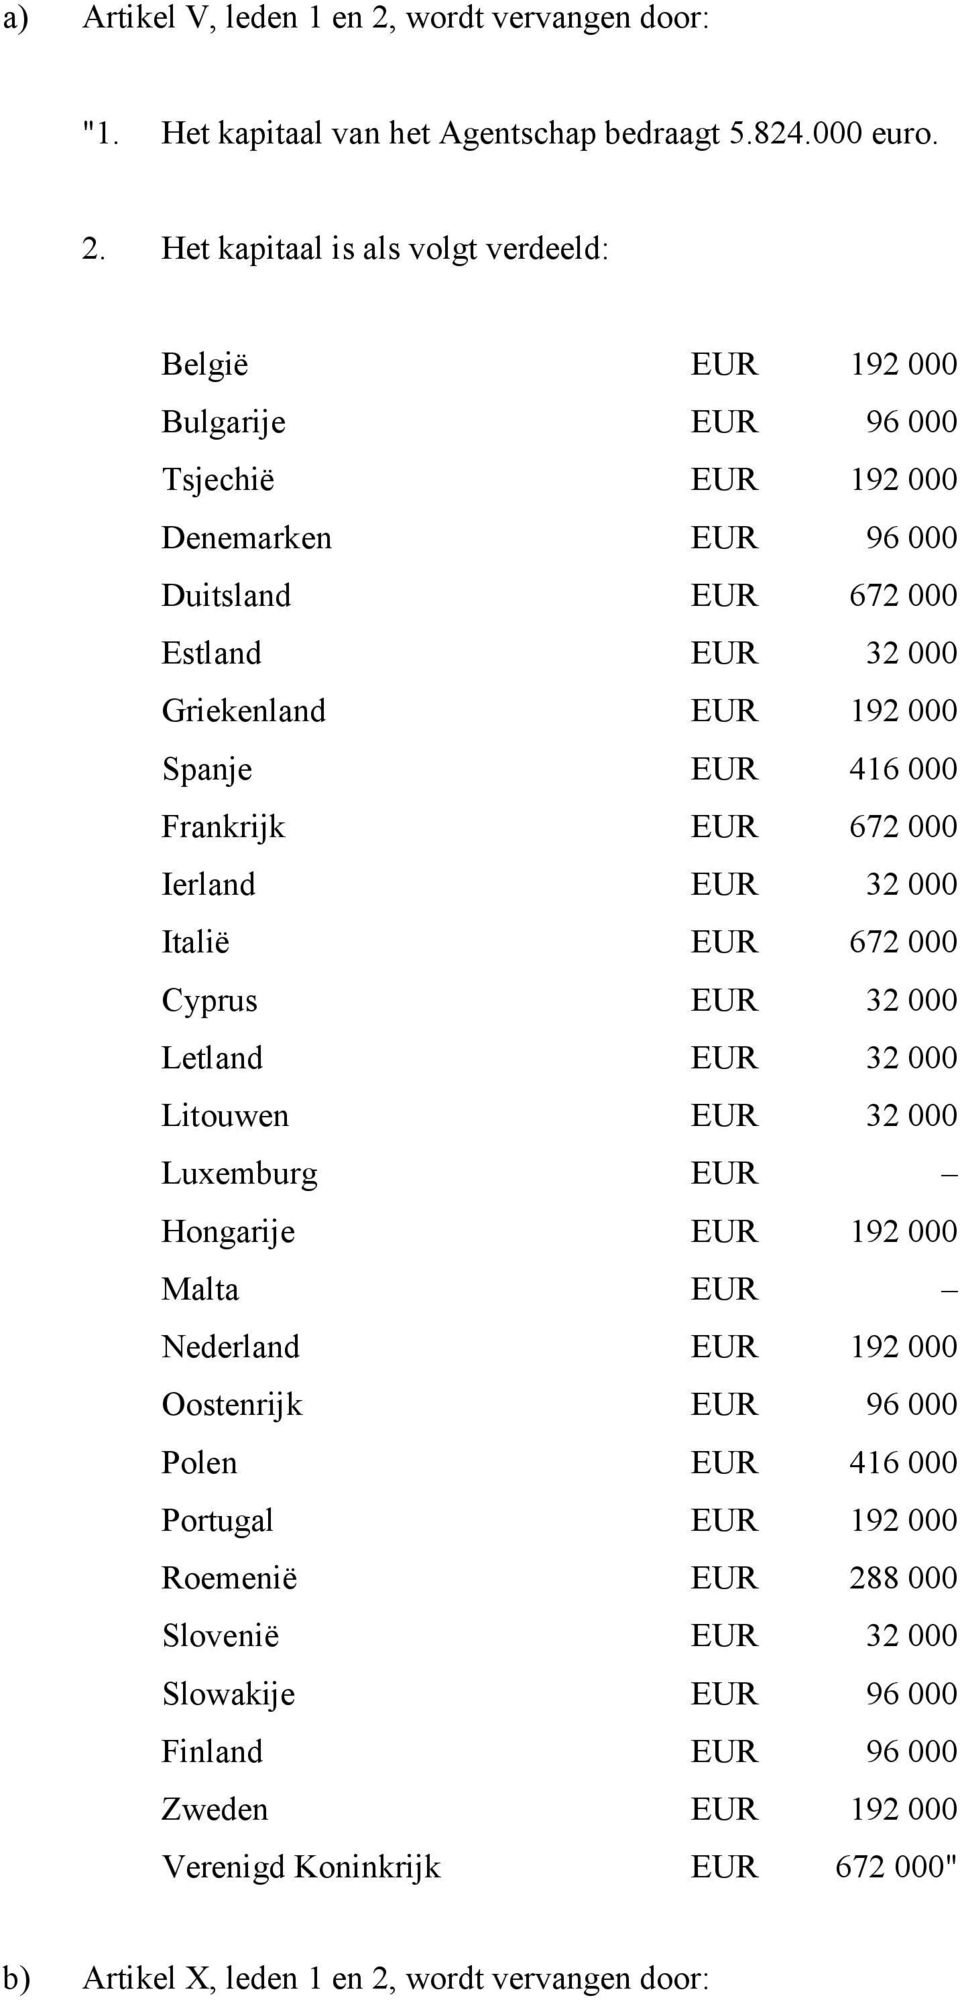 Het kapitaal is als volgt verdeeld: België EUR 192 000 Bulgarije EUR 96 000 Tsjechië EUR 192 000 Denemarken EUR 96 000 Duitsland EUR 672 000 Estland EUR 32 000 Griekenland EUR 192 000